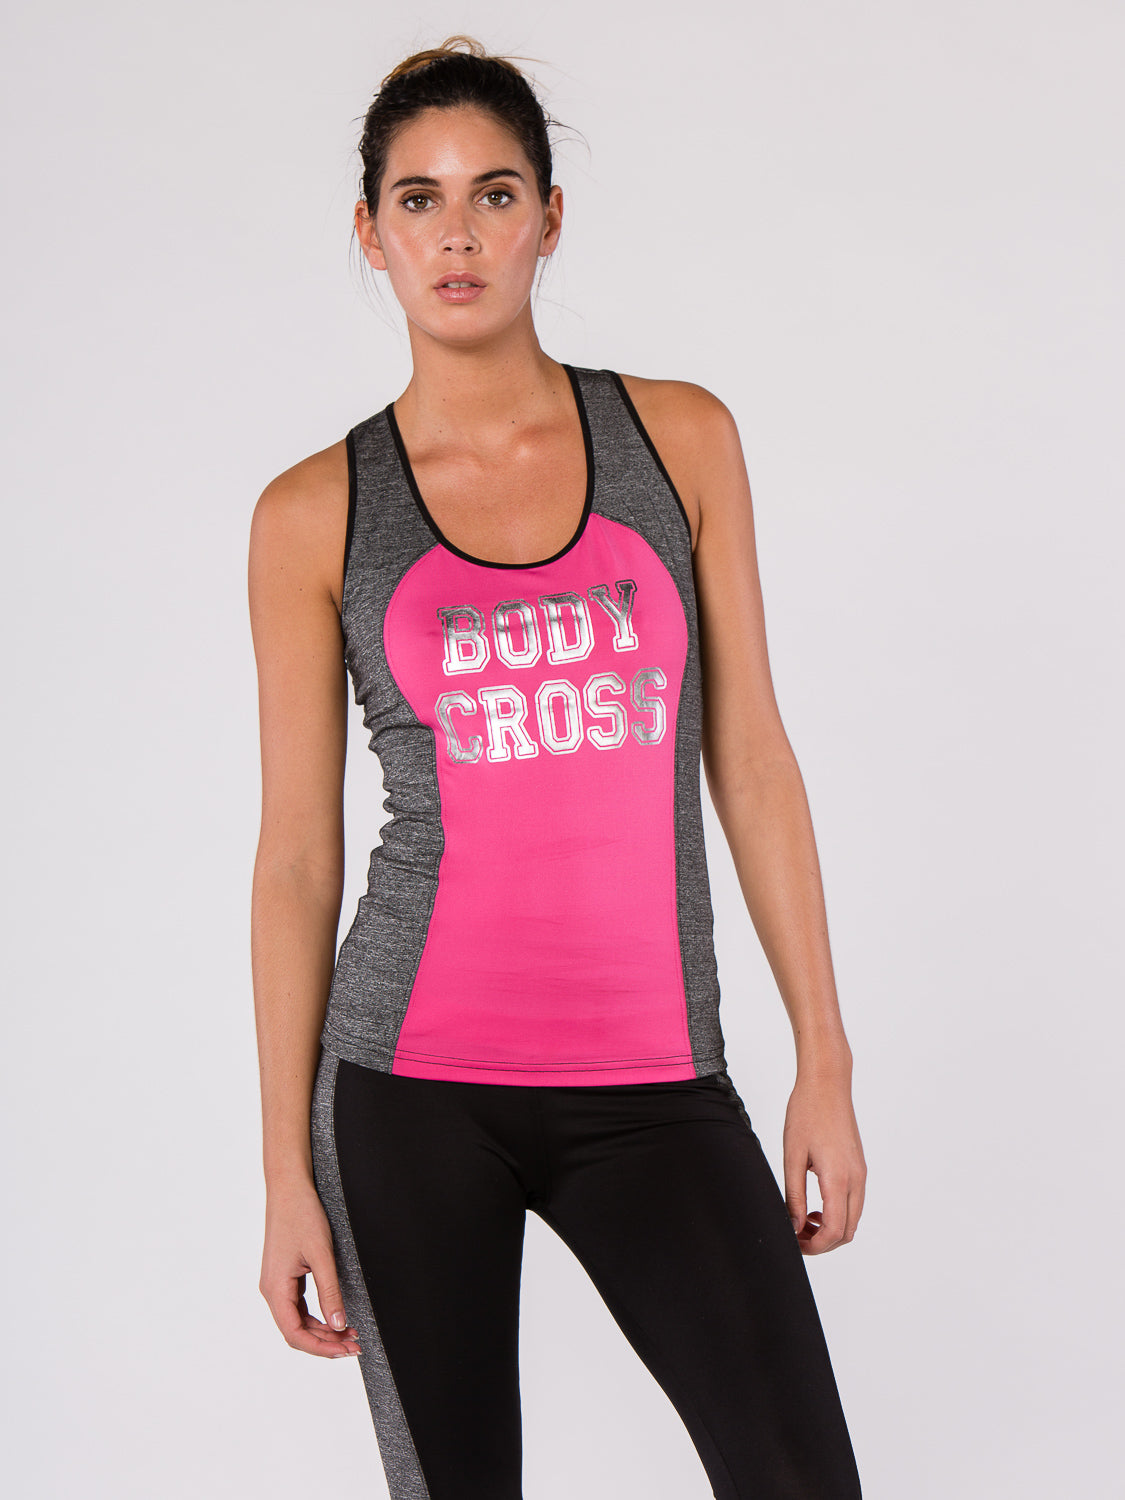 Ladies Fitness Tank Top BodyCross - Chloe Pink